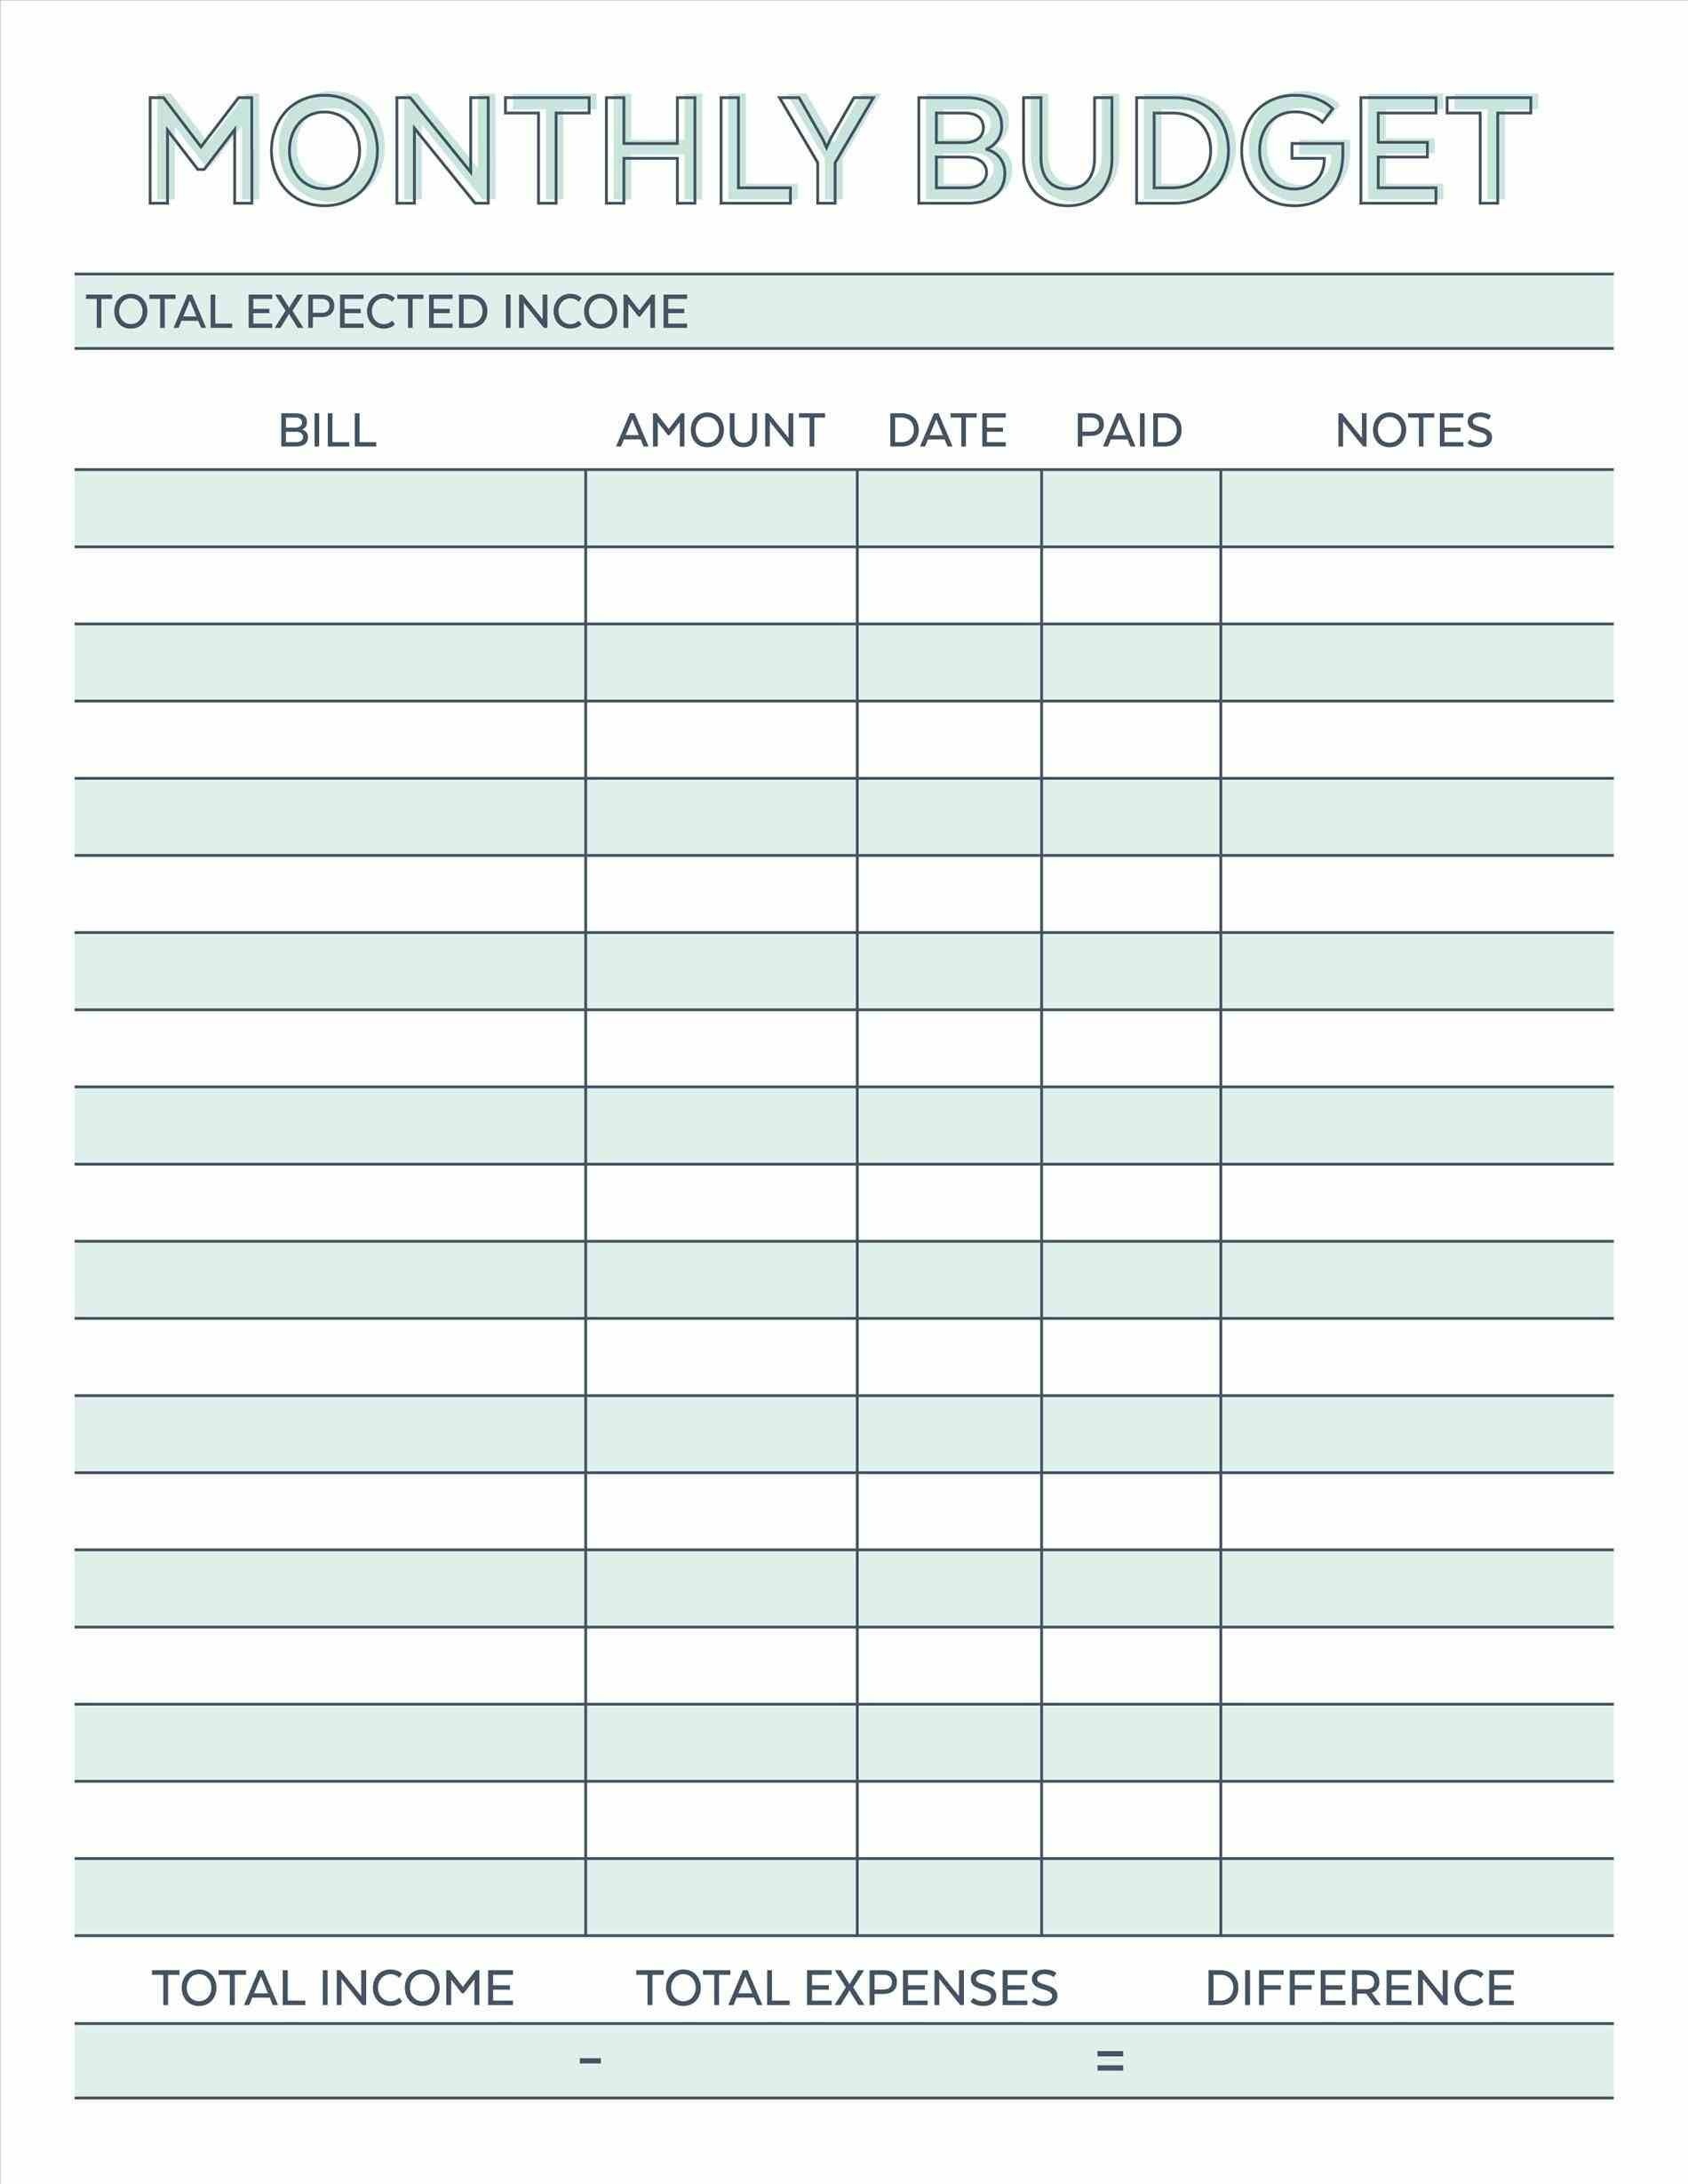 Home Expense Spreadsheet Template Regarding Expense Sheet Template Free As Well Spreadsheet With Household Plus